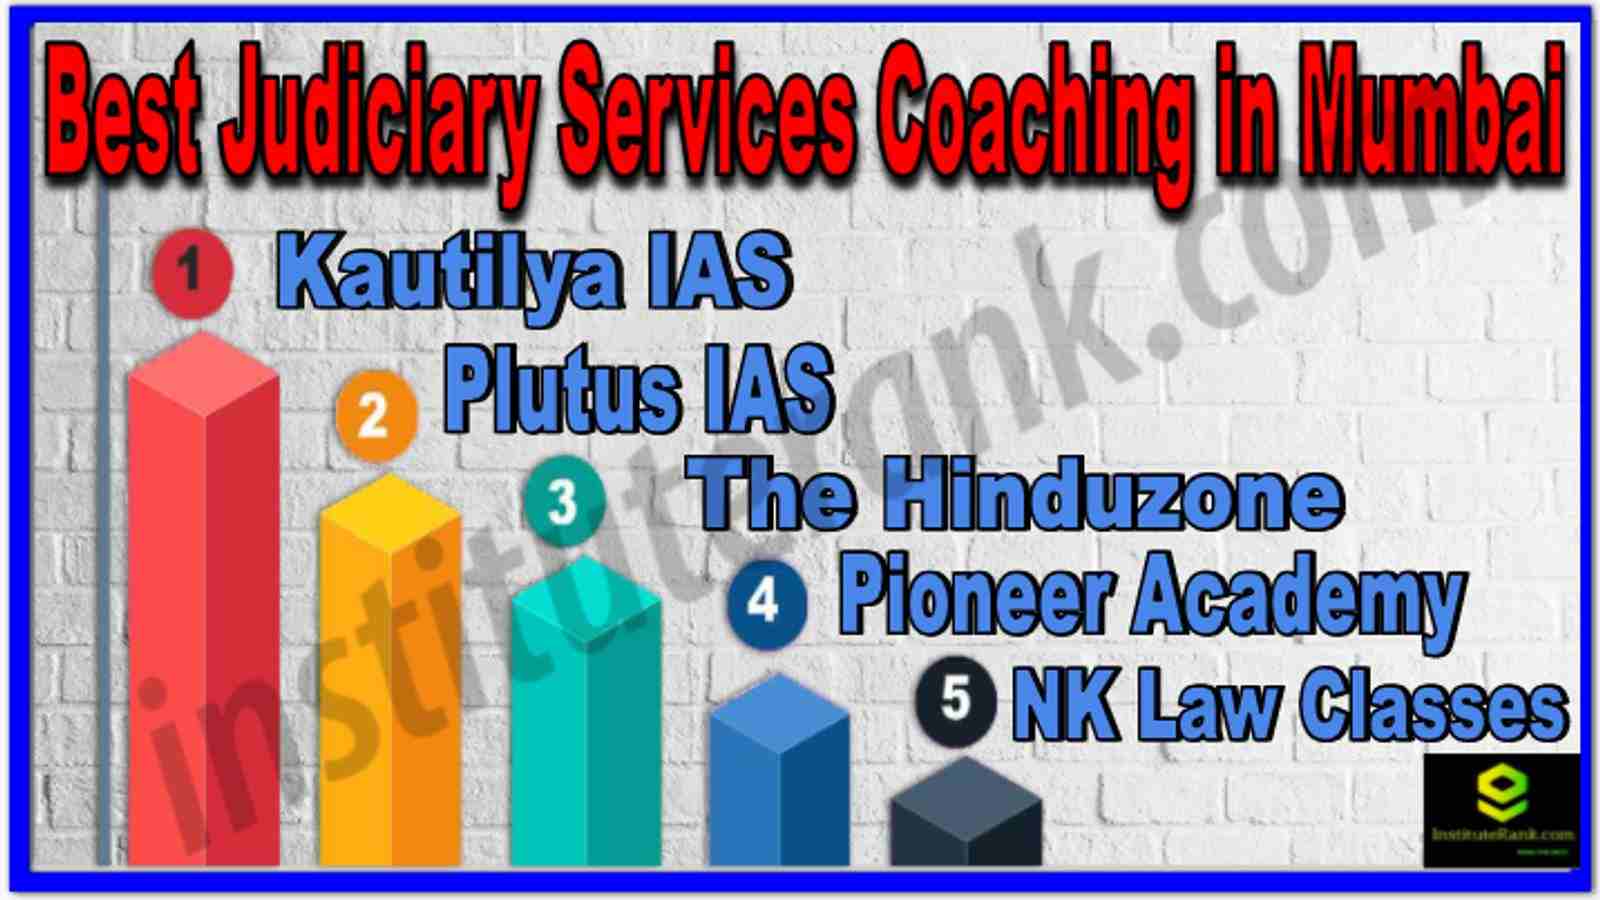 Best Judiciary Services Coaching in Mumbai